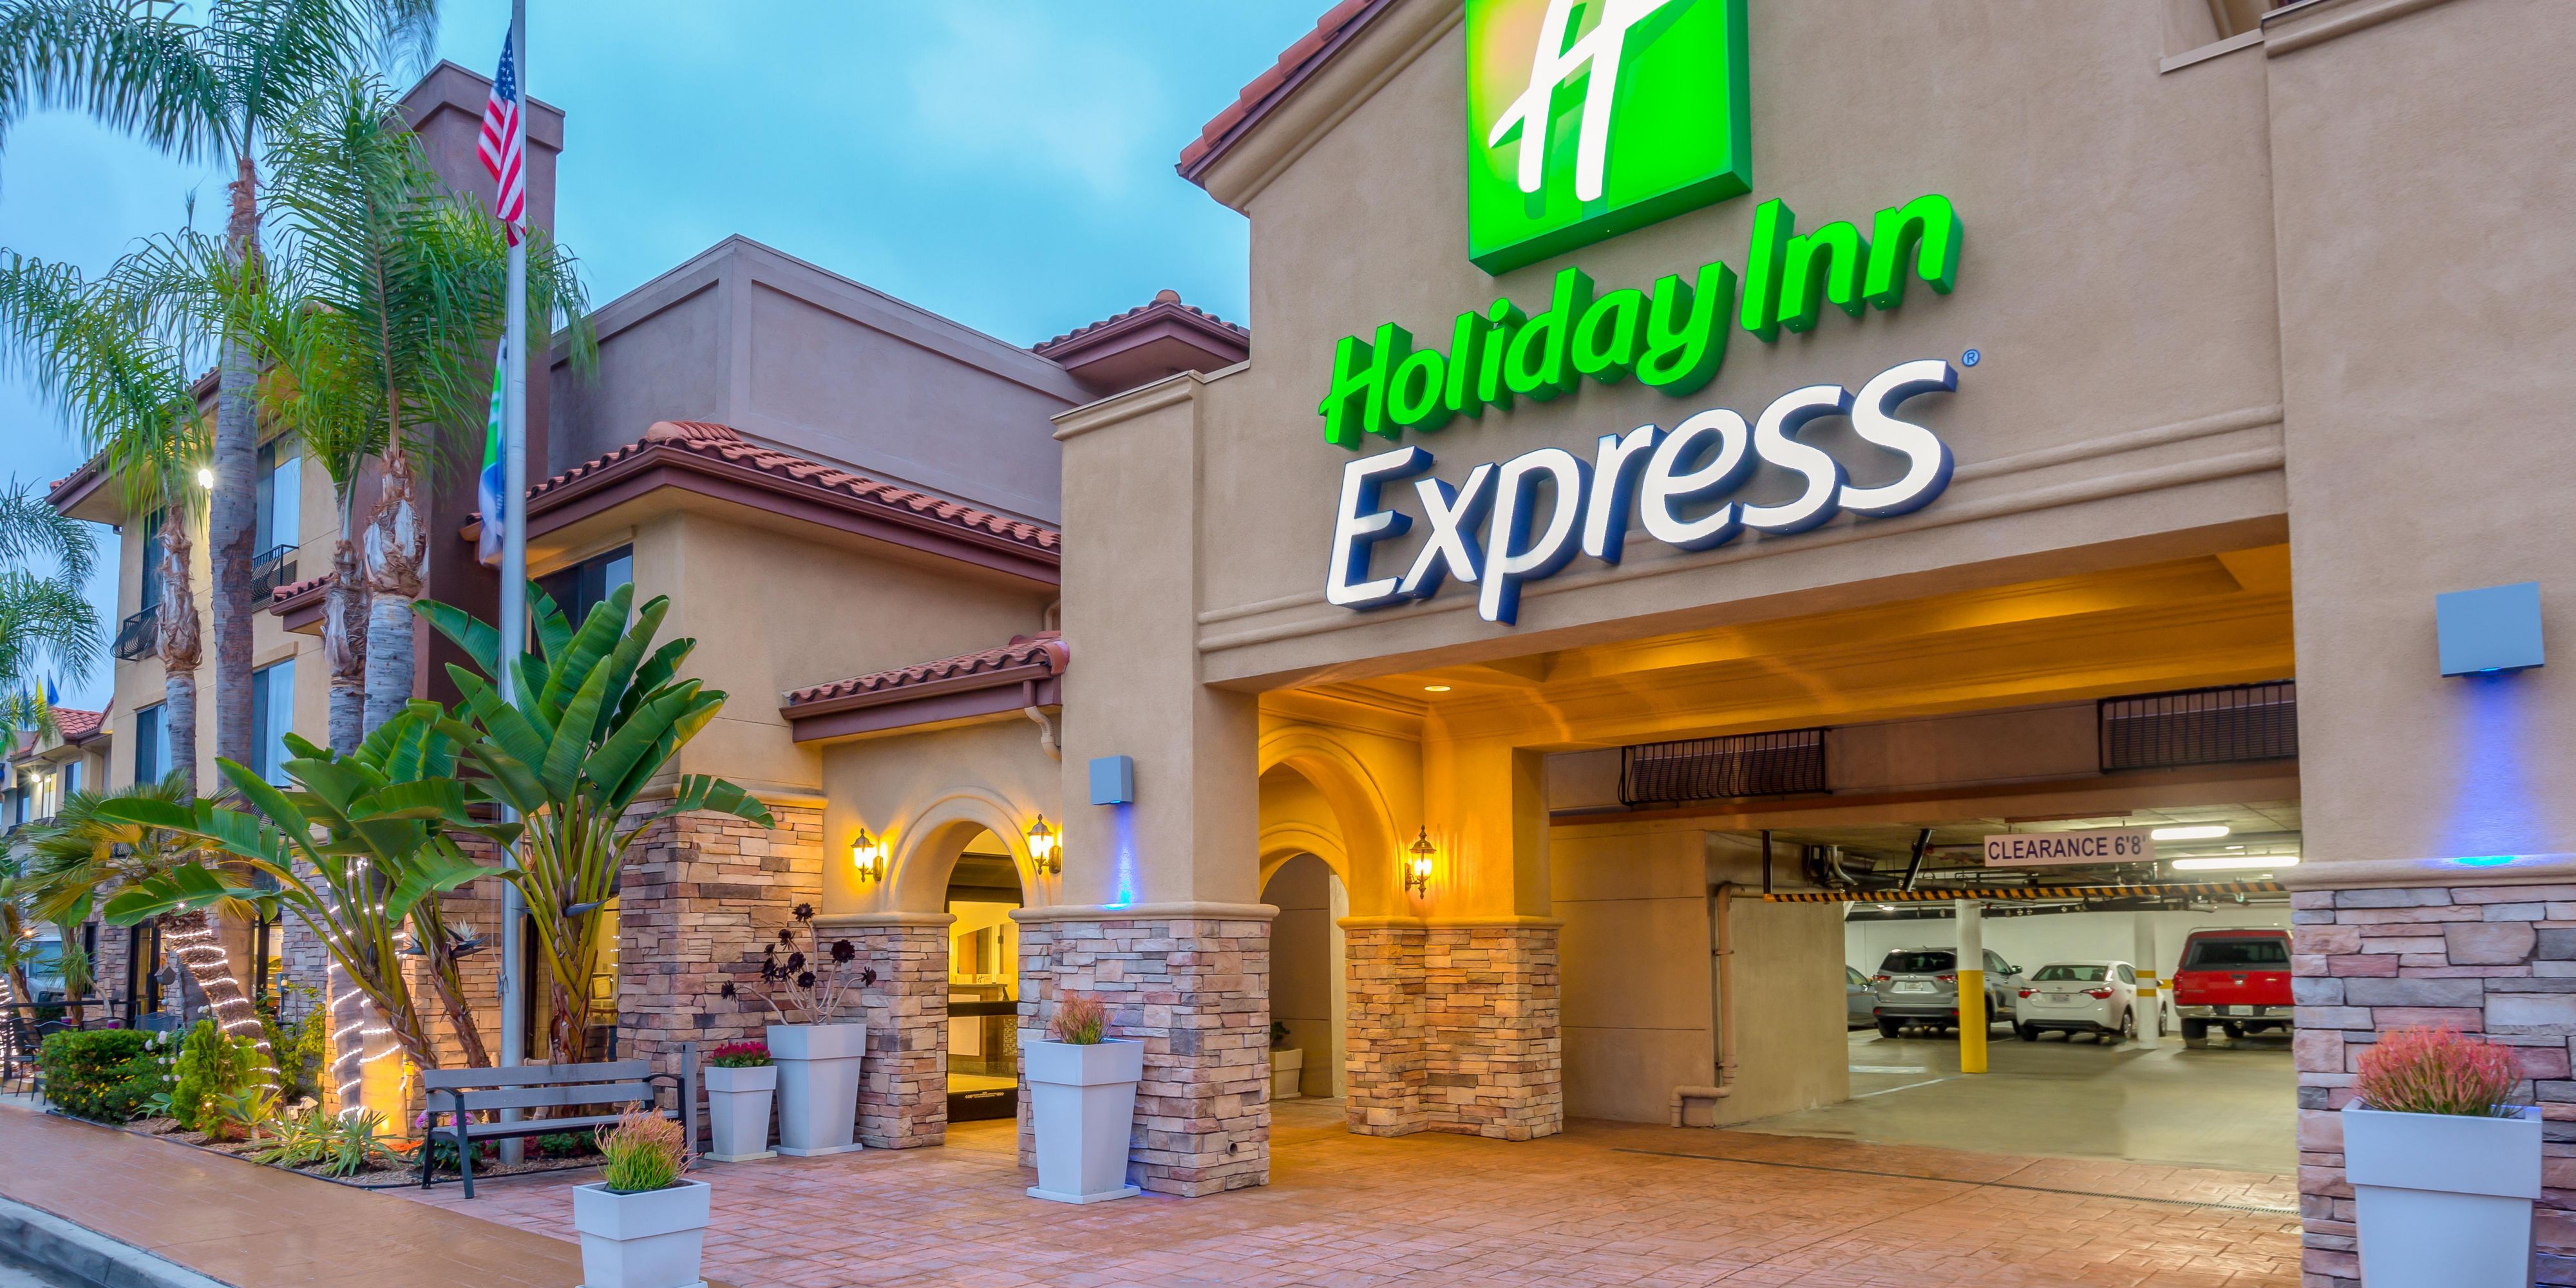 Holiday Inn Express San Diego 4561553016 2x1